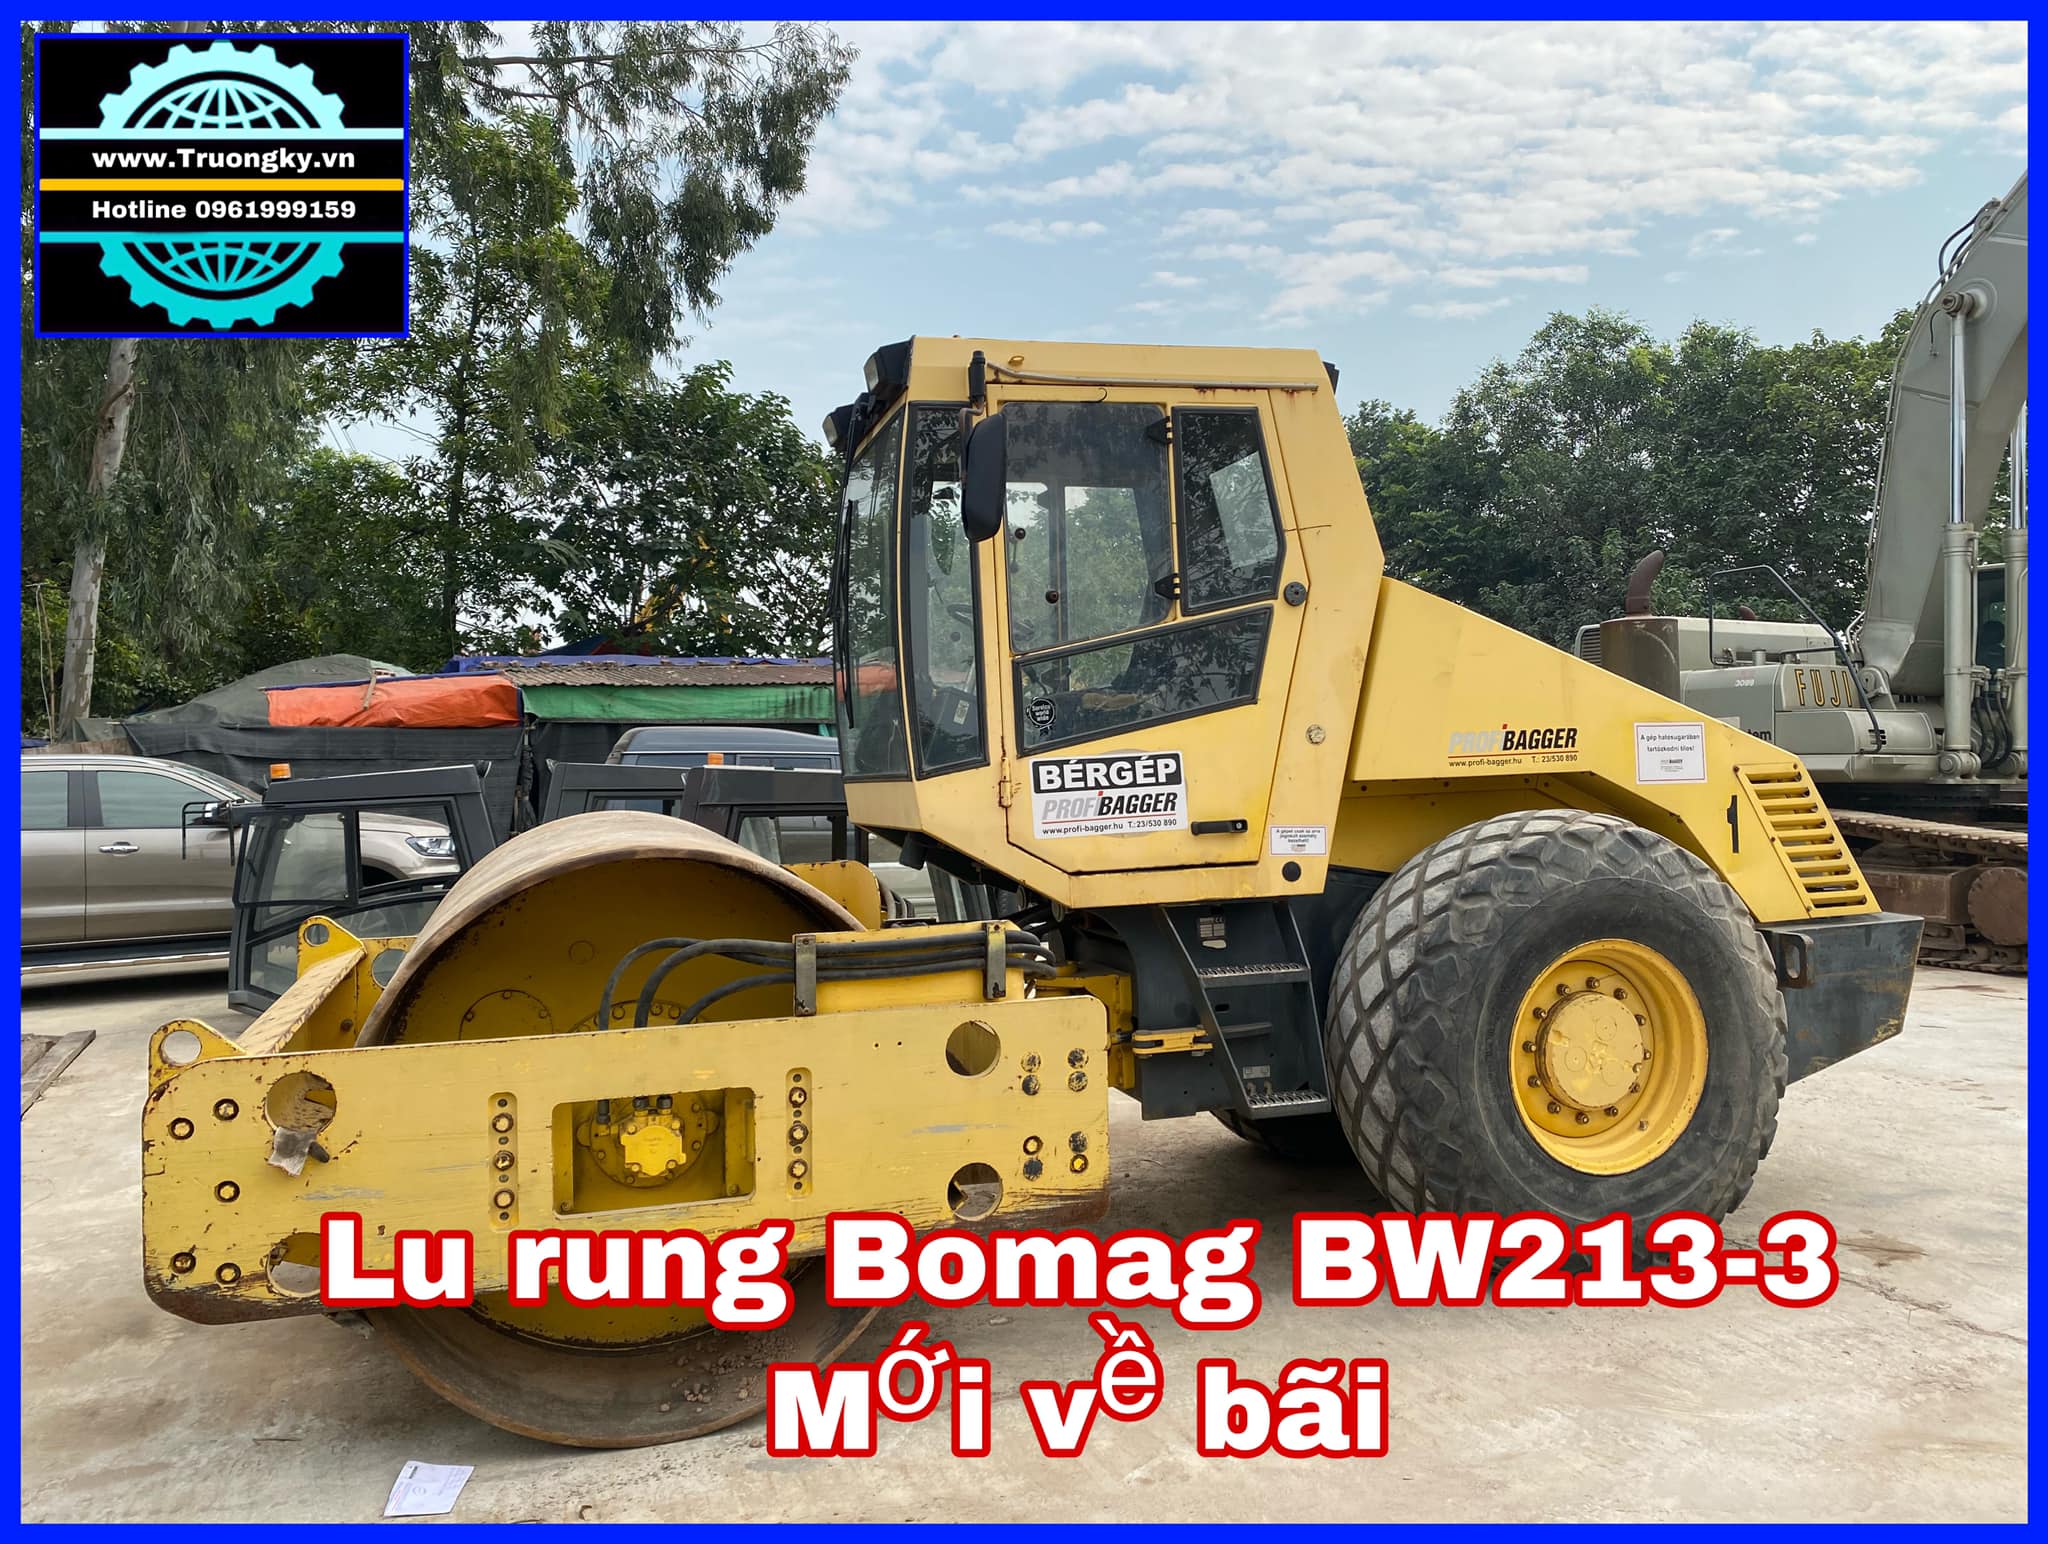 Lu rung 12 tấn Bomag BW213-3 (SOLD)